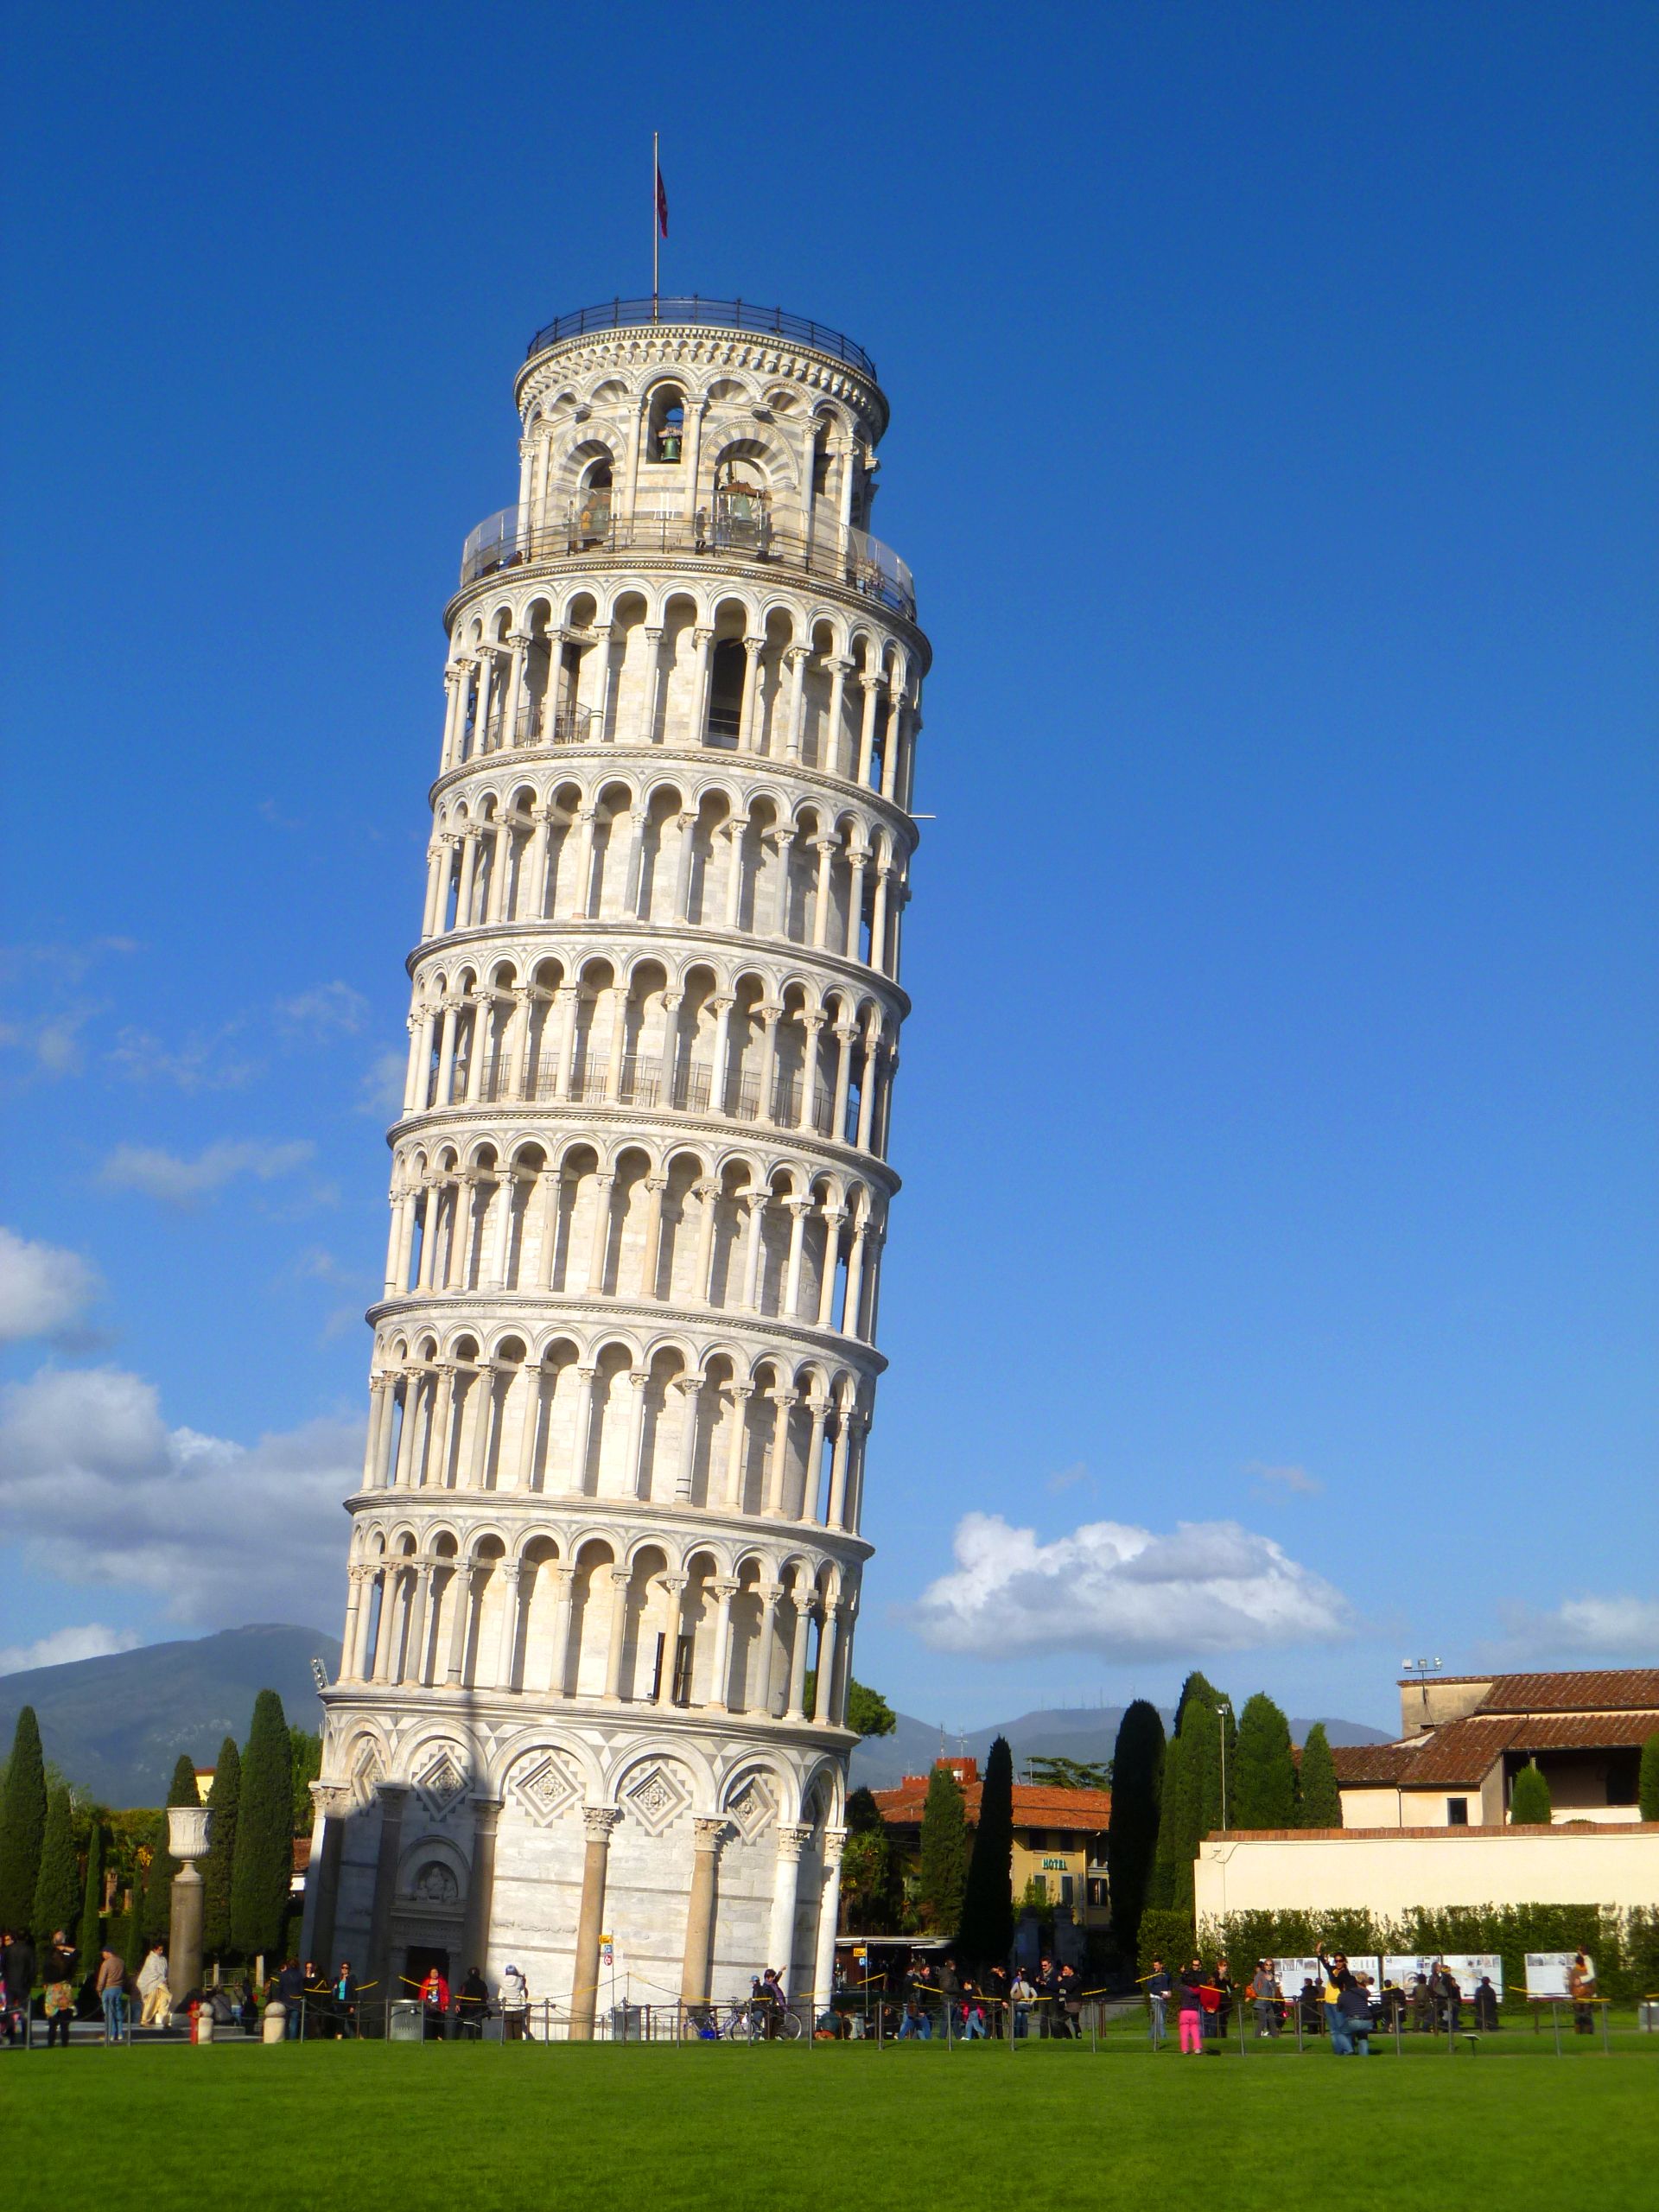 Pisa, Italy | The Leaning Tower of Pisa (Torre pendente di 